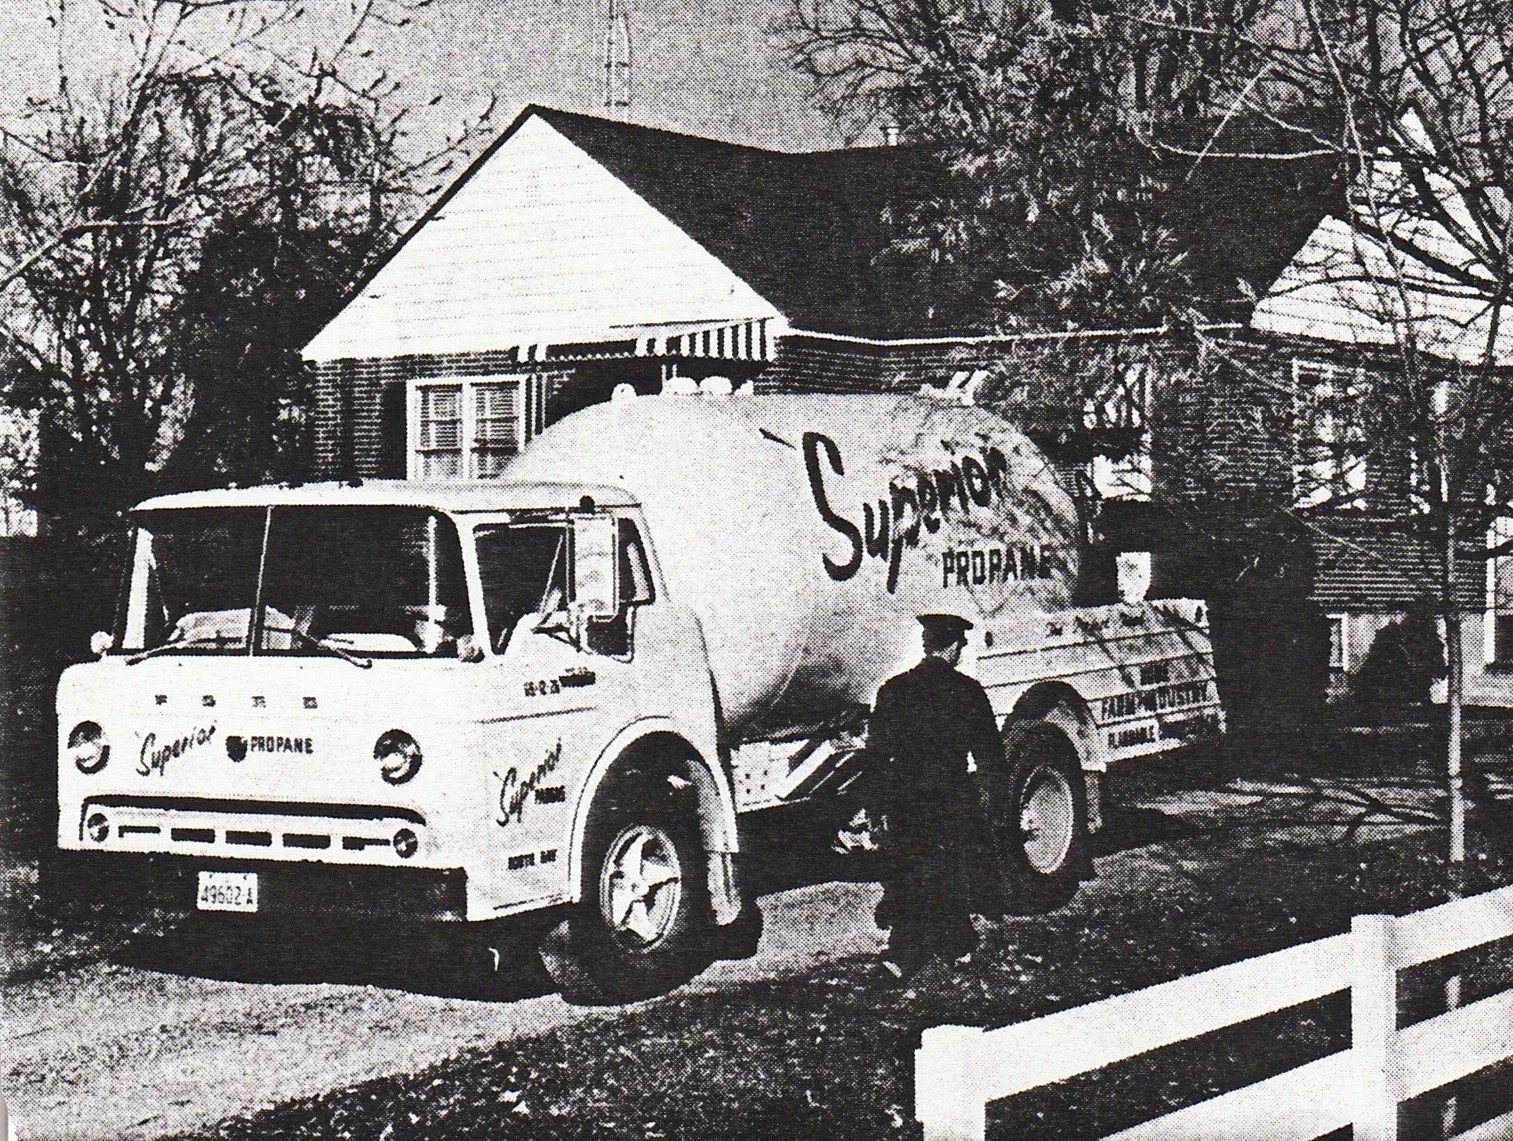 Black and white photo of historic Superior truck